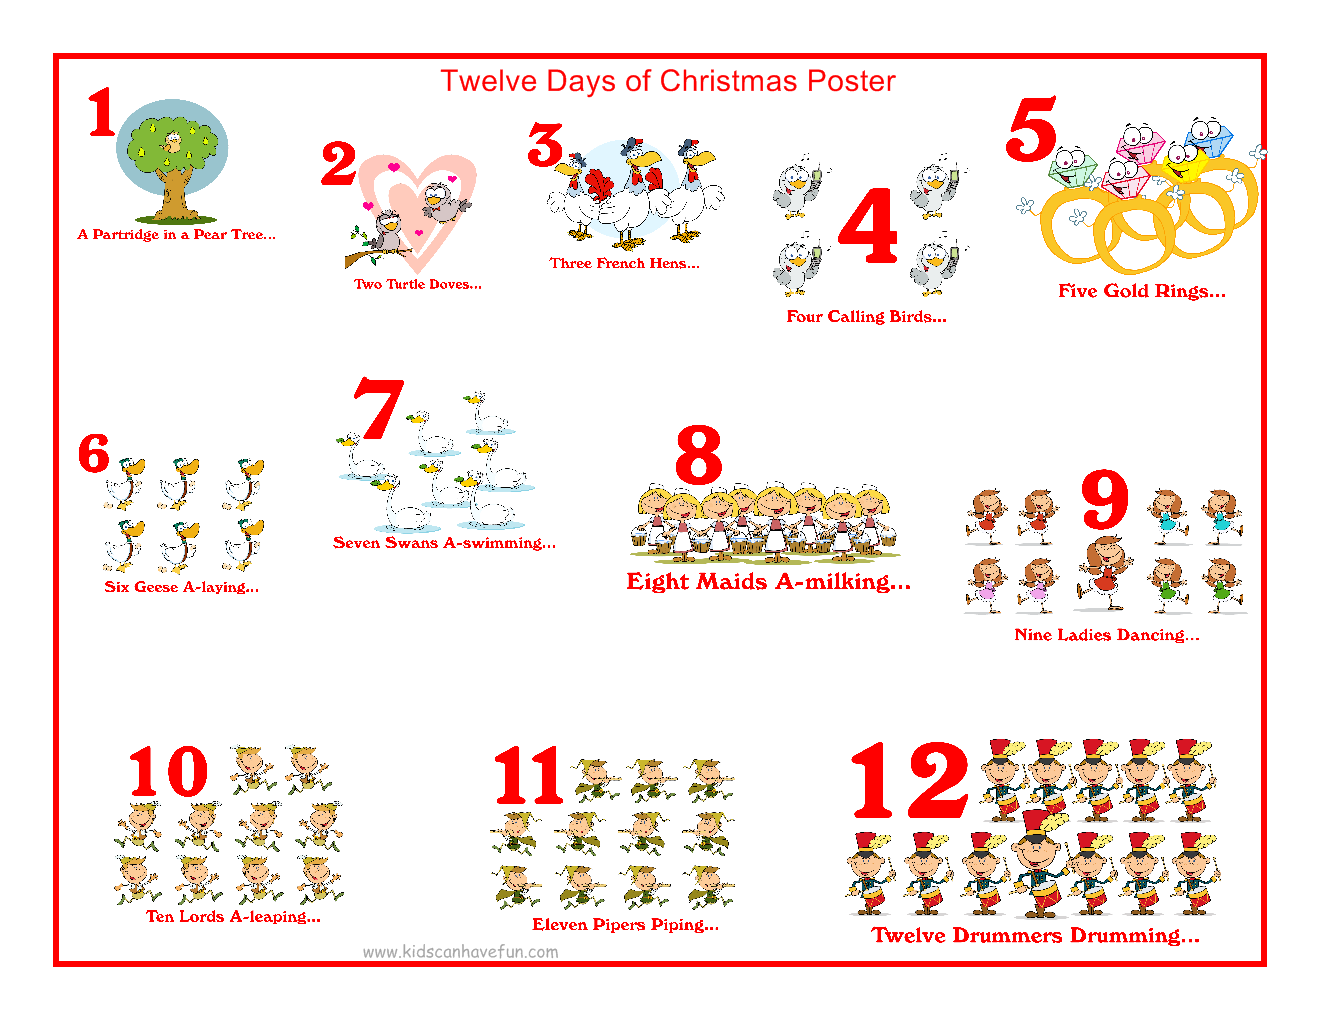 12 days of christmas | Hoyland Common Primary School BlogSite